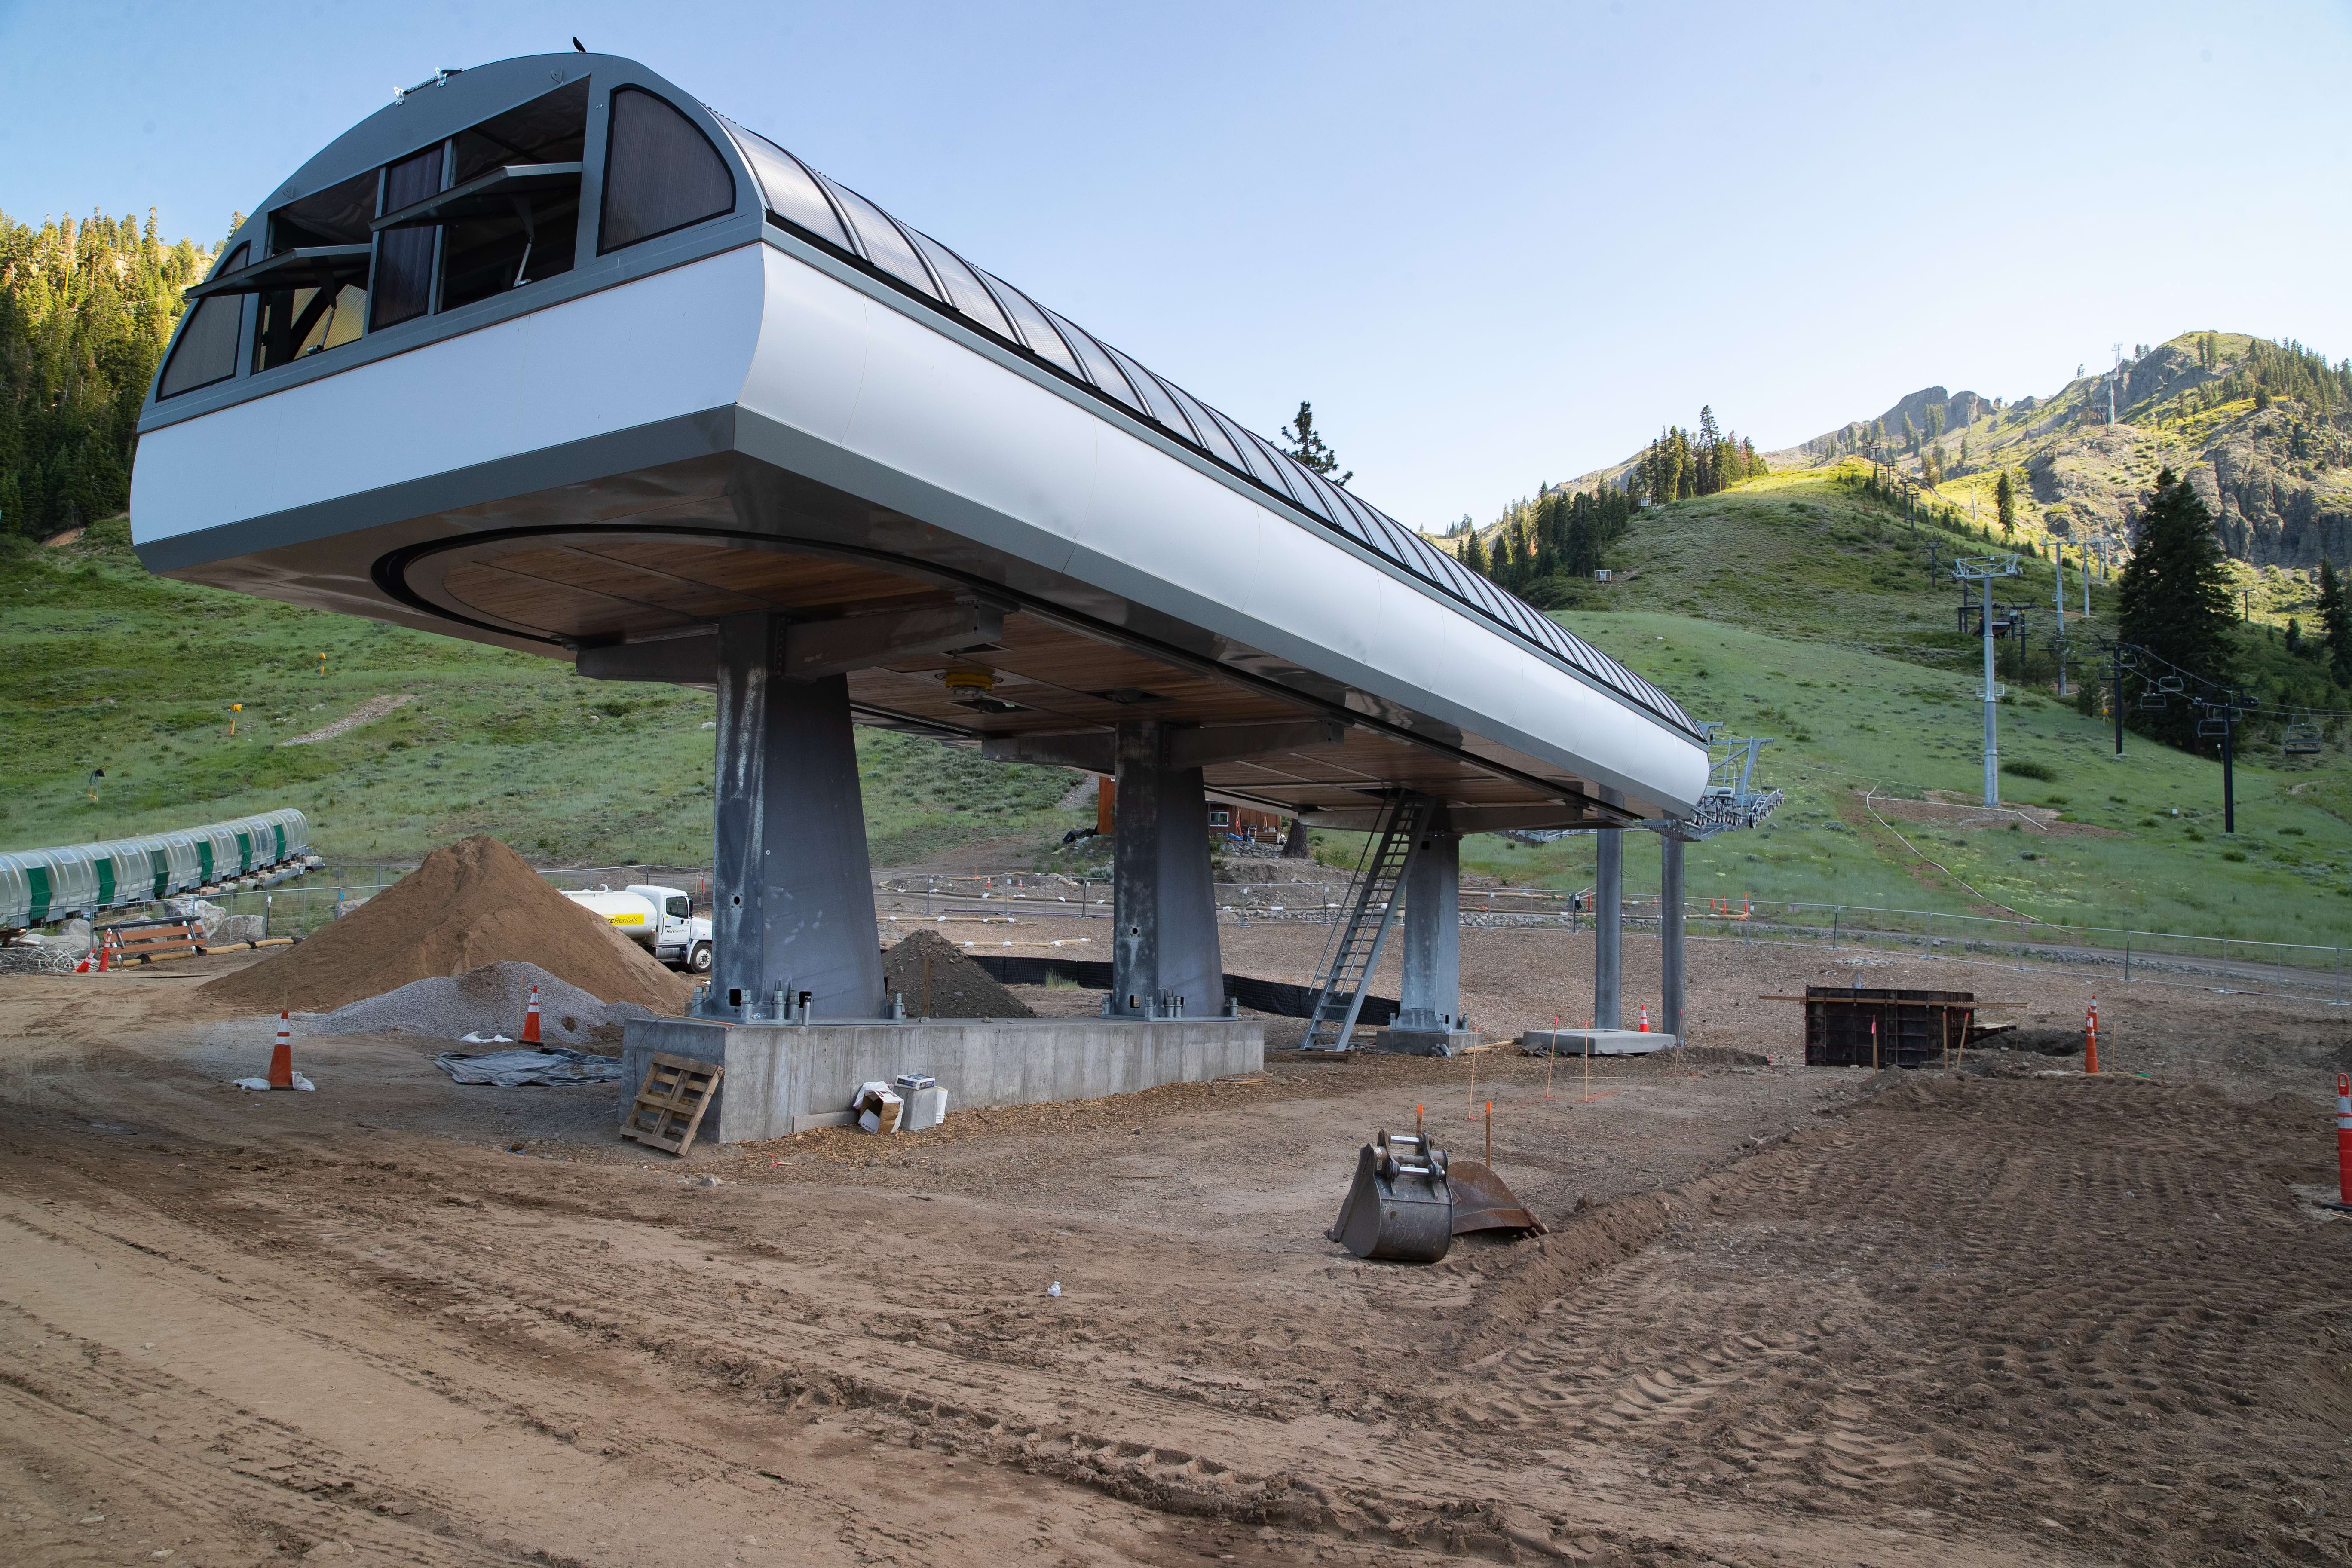 Construction on the Base to Base Gondola near The Village at Palisades Tahoe.